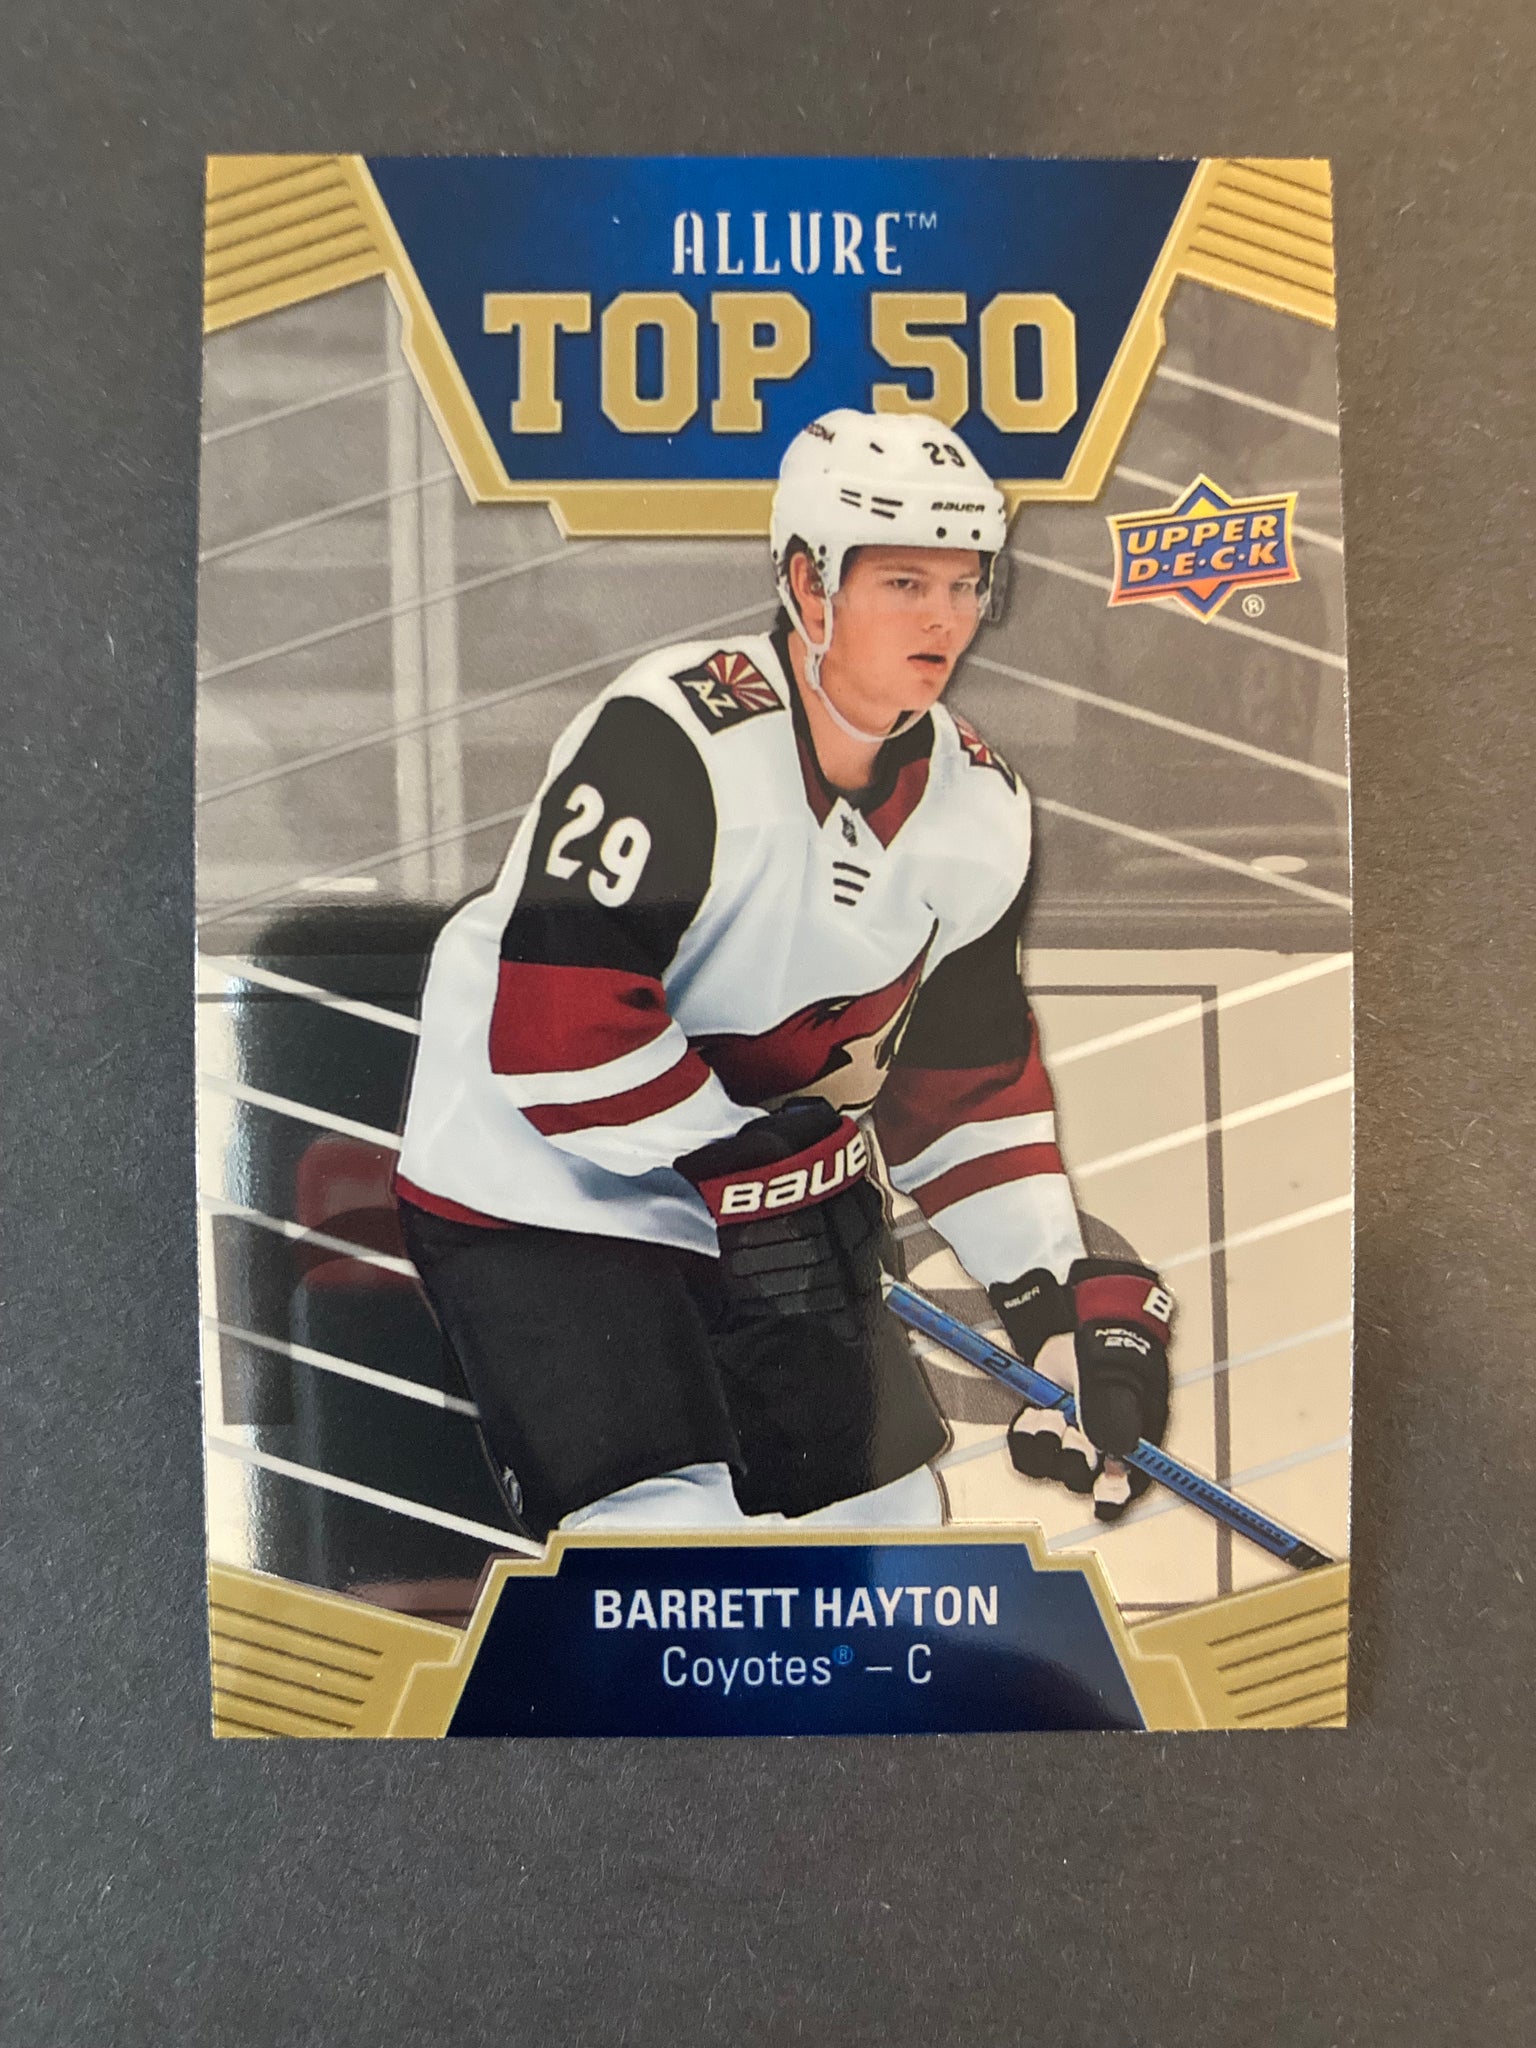 Barrett Hayton Allure 2019 Top 50 # T50-8 Arizona Coyotes Upper Deck